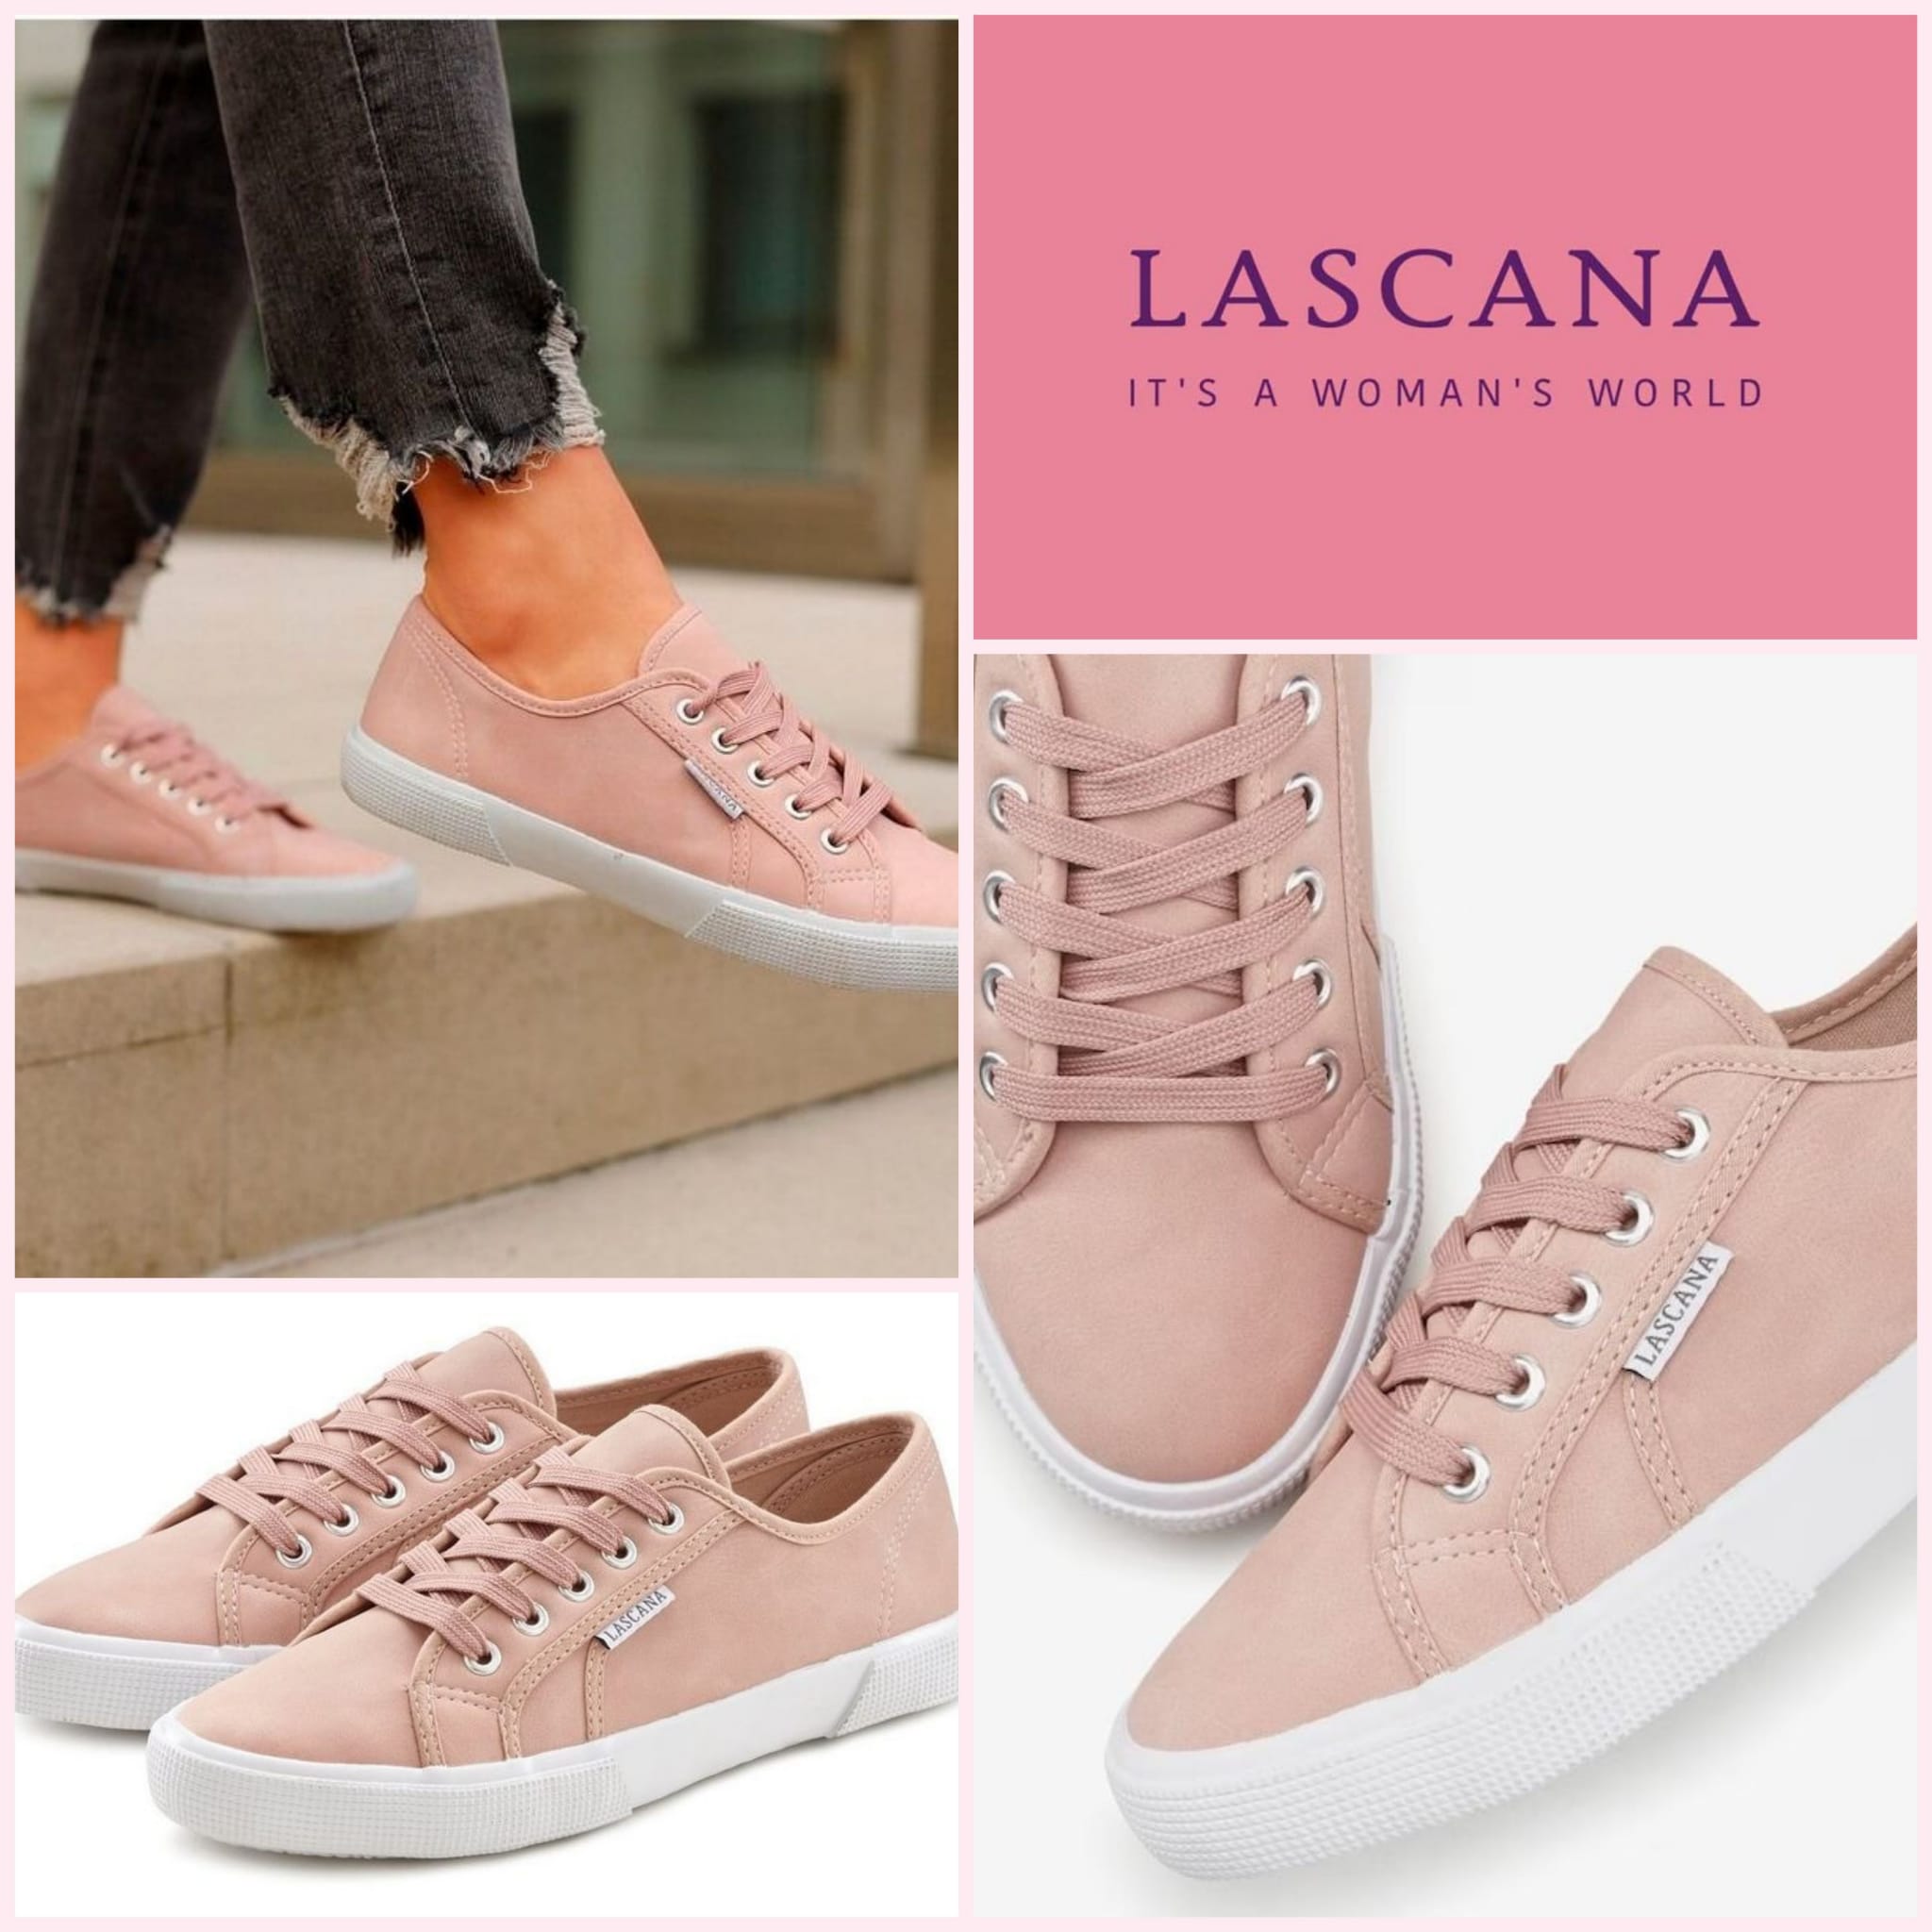 Women's sneakers from Lascana